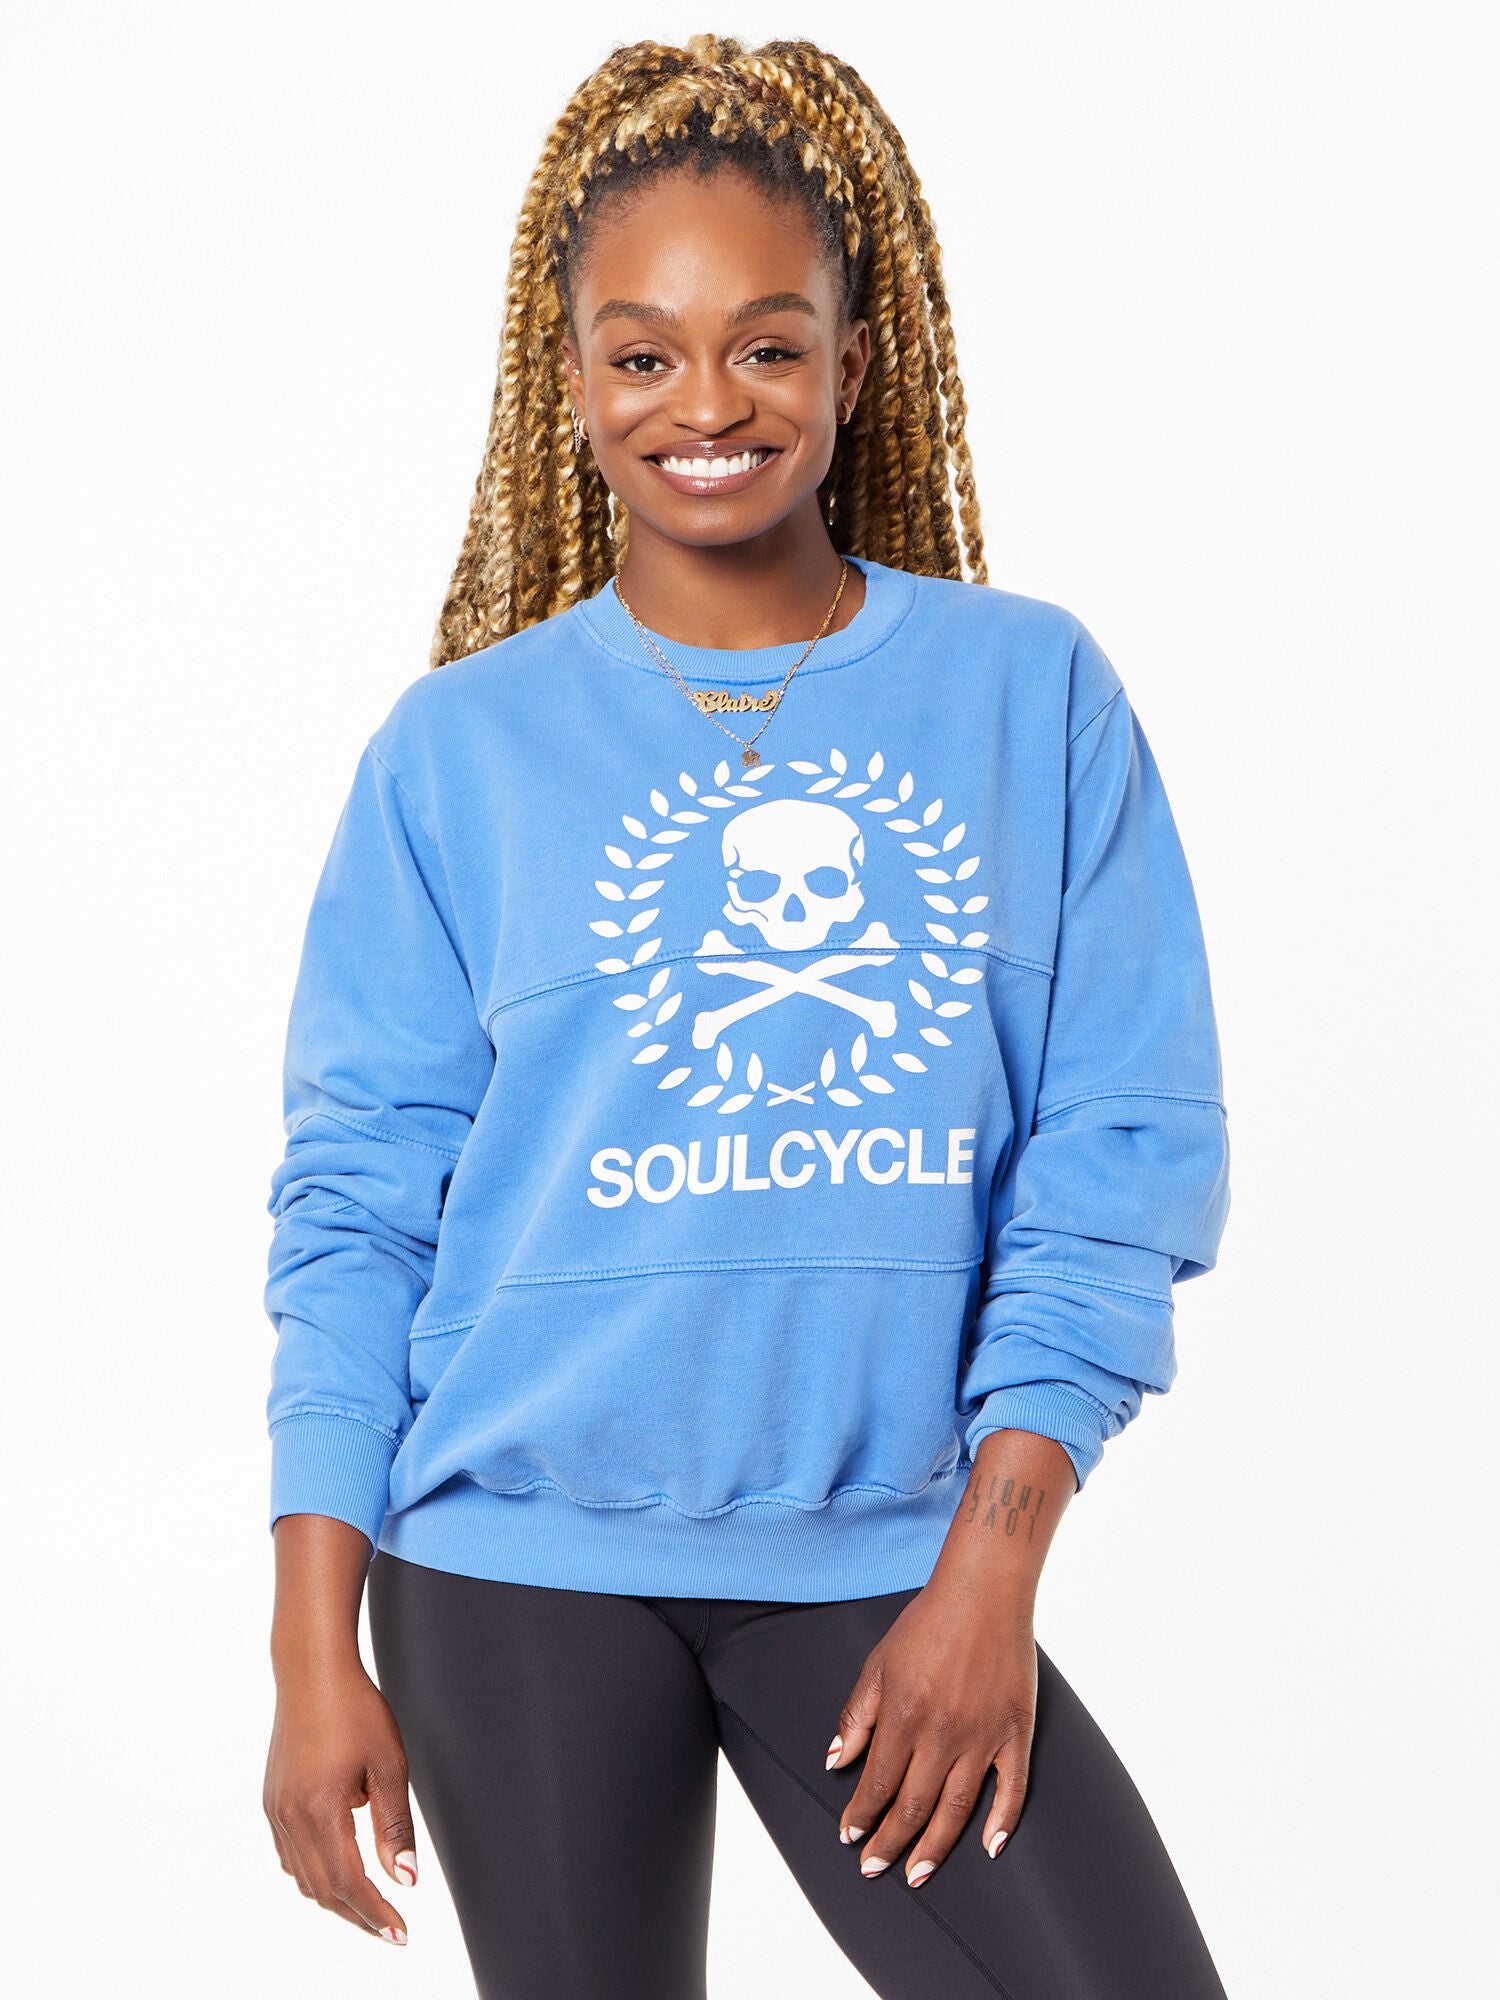 Soul Cycle Adidas Womens Sweatshirt Tee Shirt Black Blue Size Medium S -  Shop Linda's Stuff